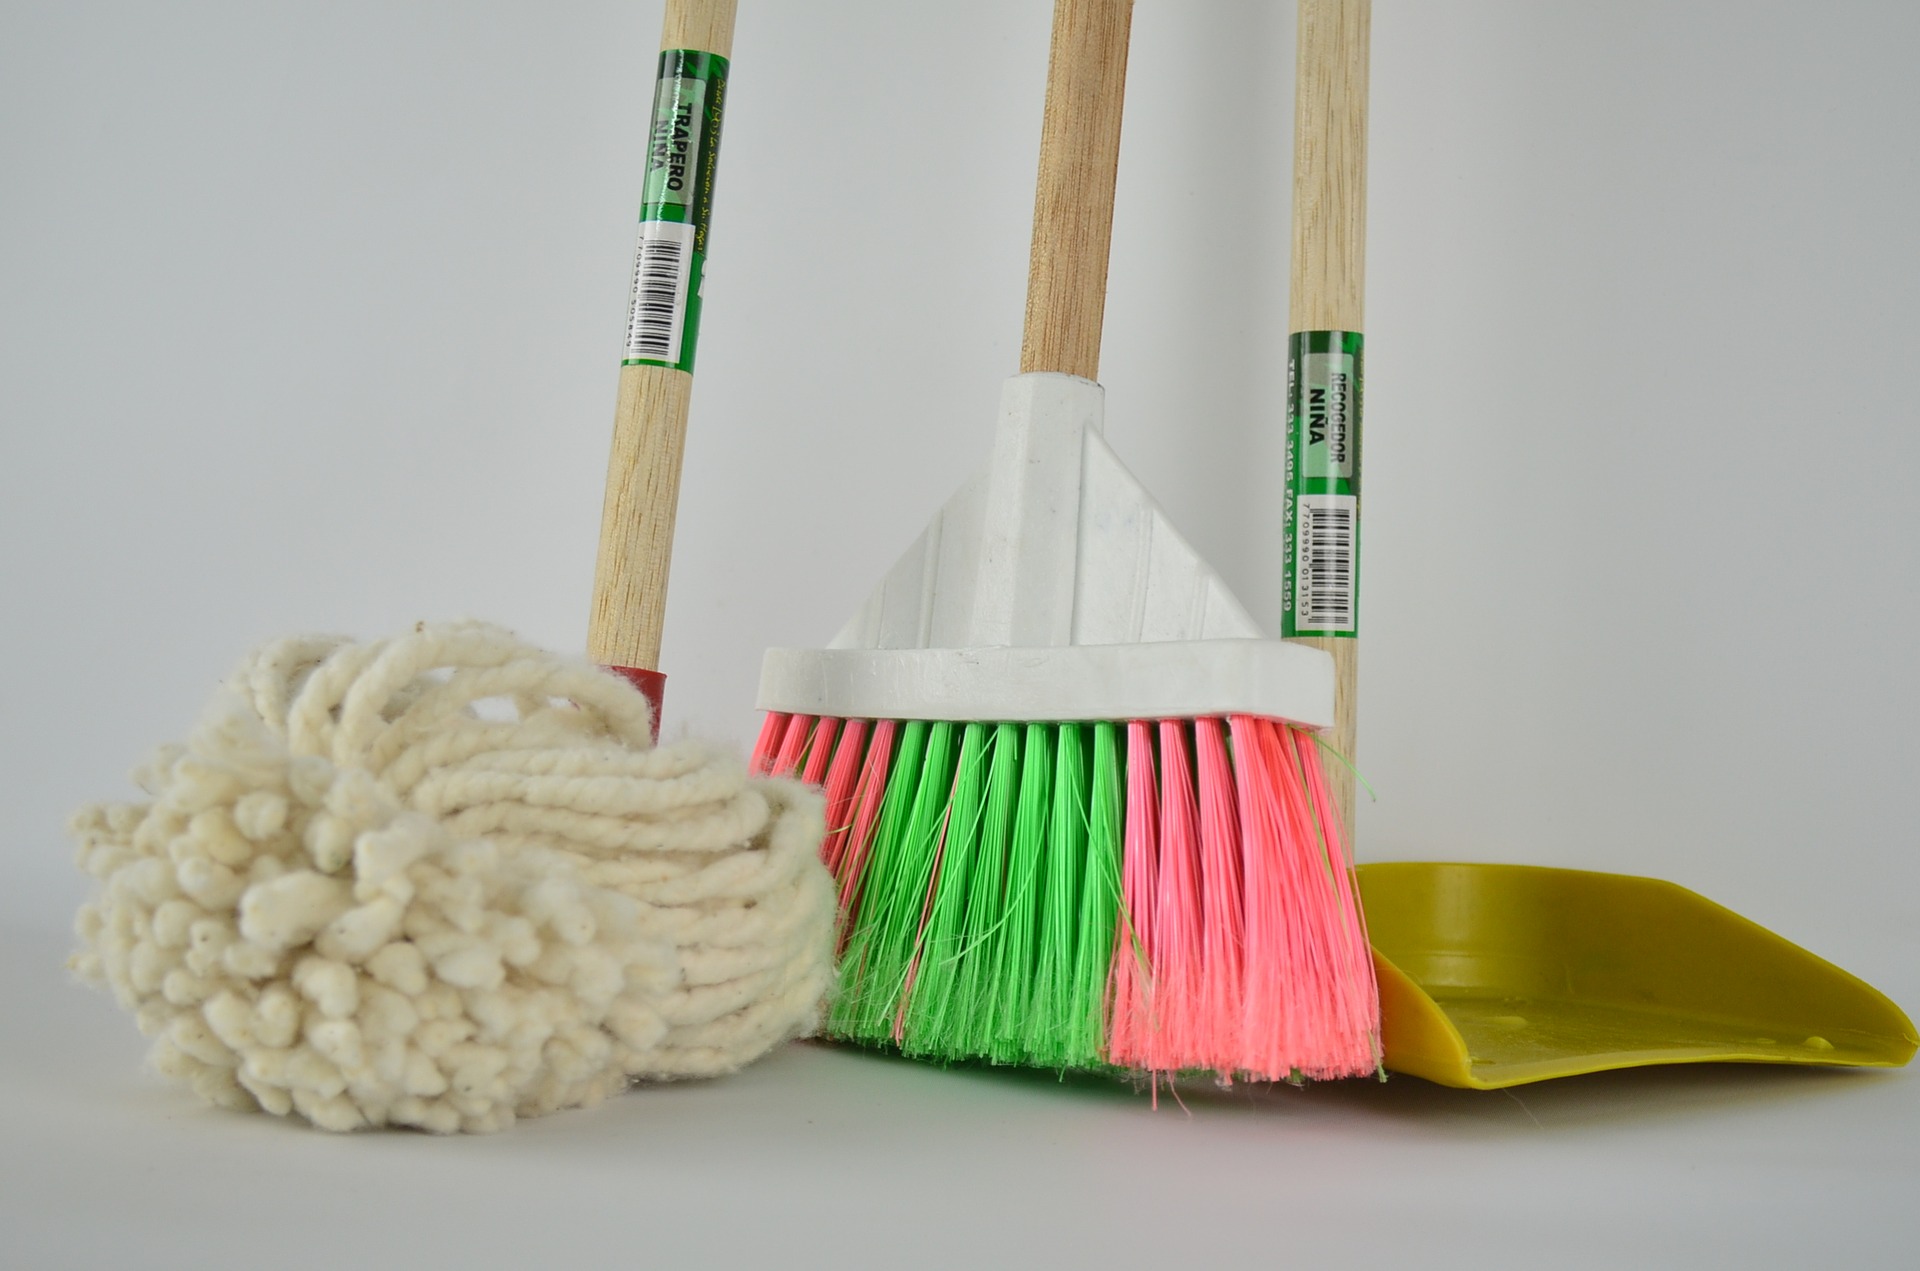 5 dicas para ter a casa sempre limpa e arrumada